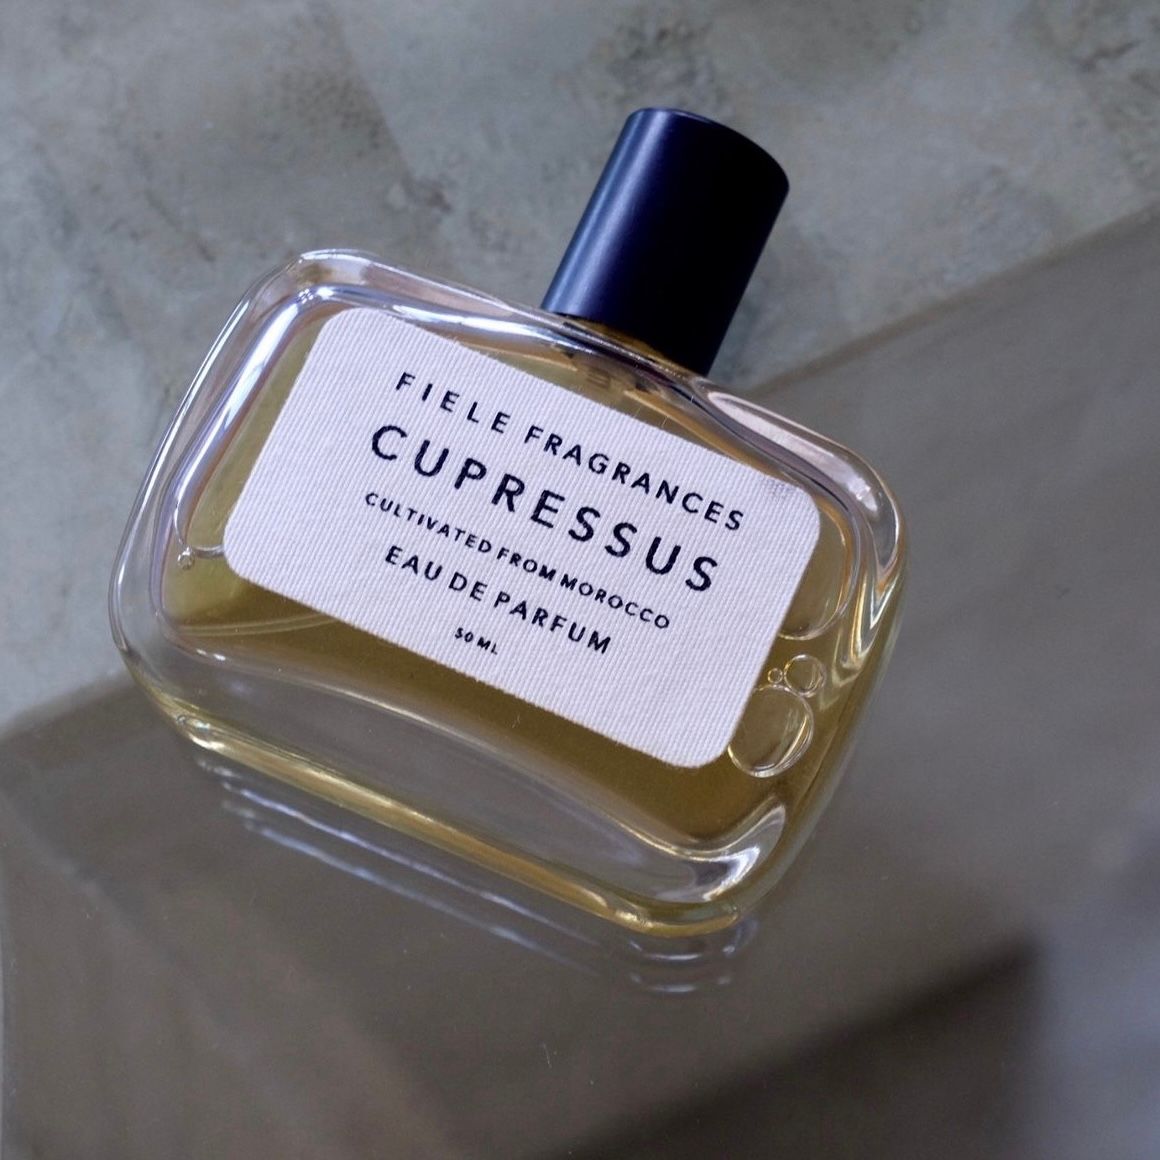 FIELE FRAGRANCES - 【残りわずか】Eau De Parfum 50ml(CUPRESSUS